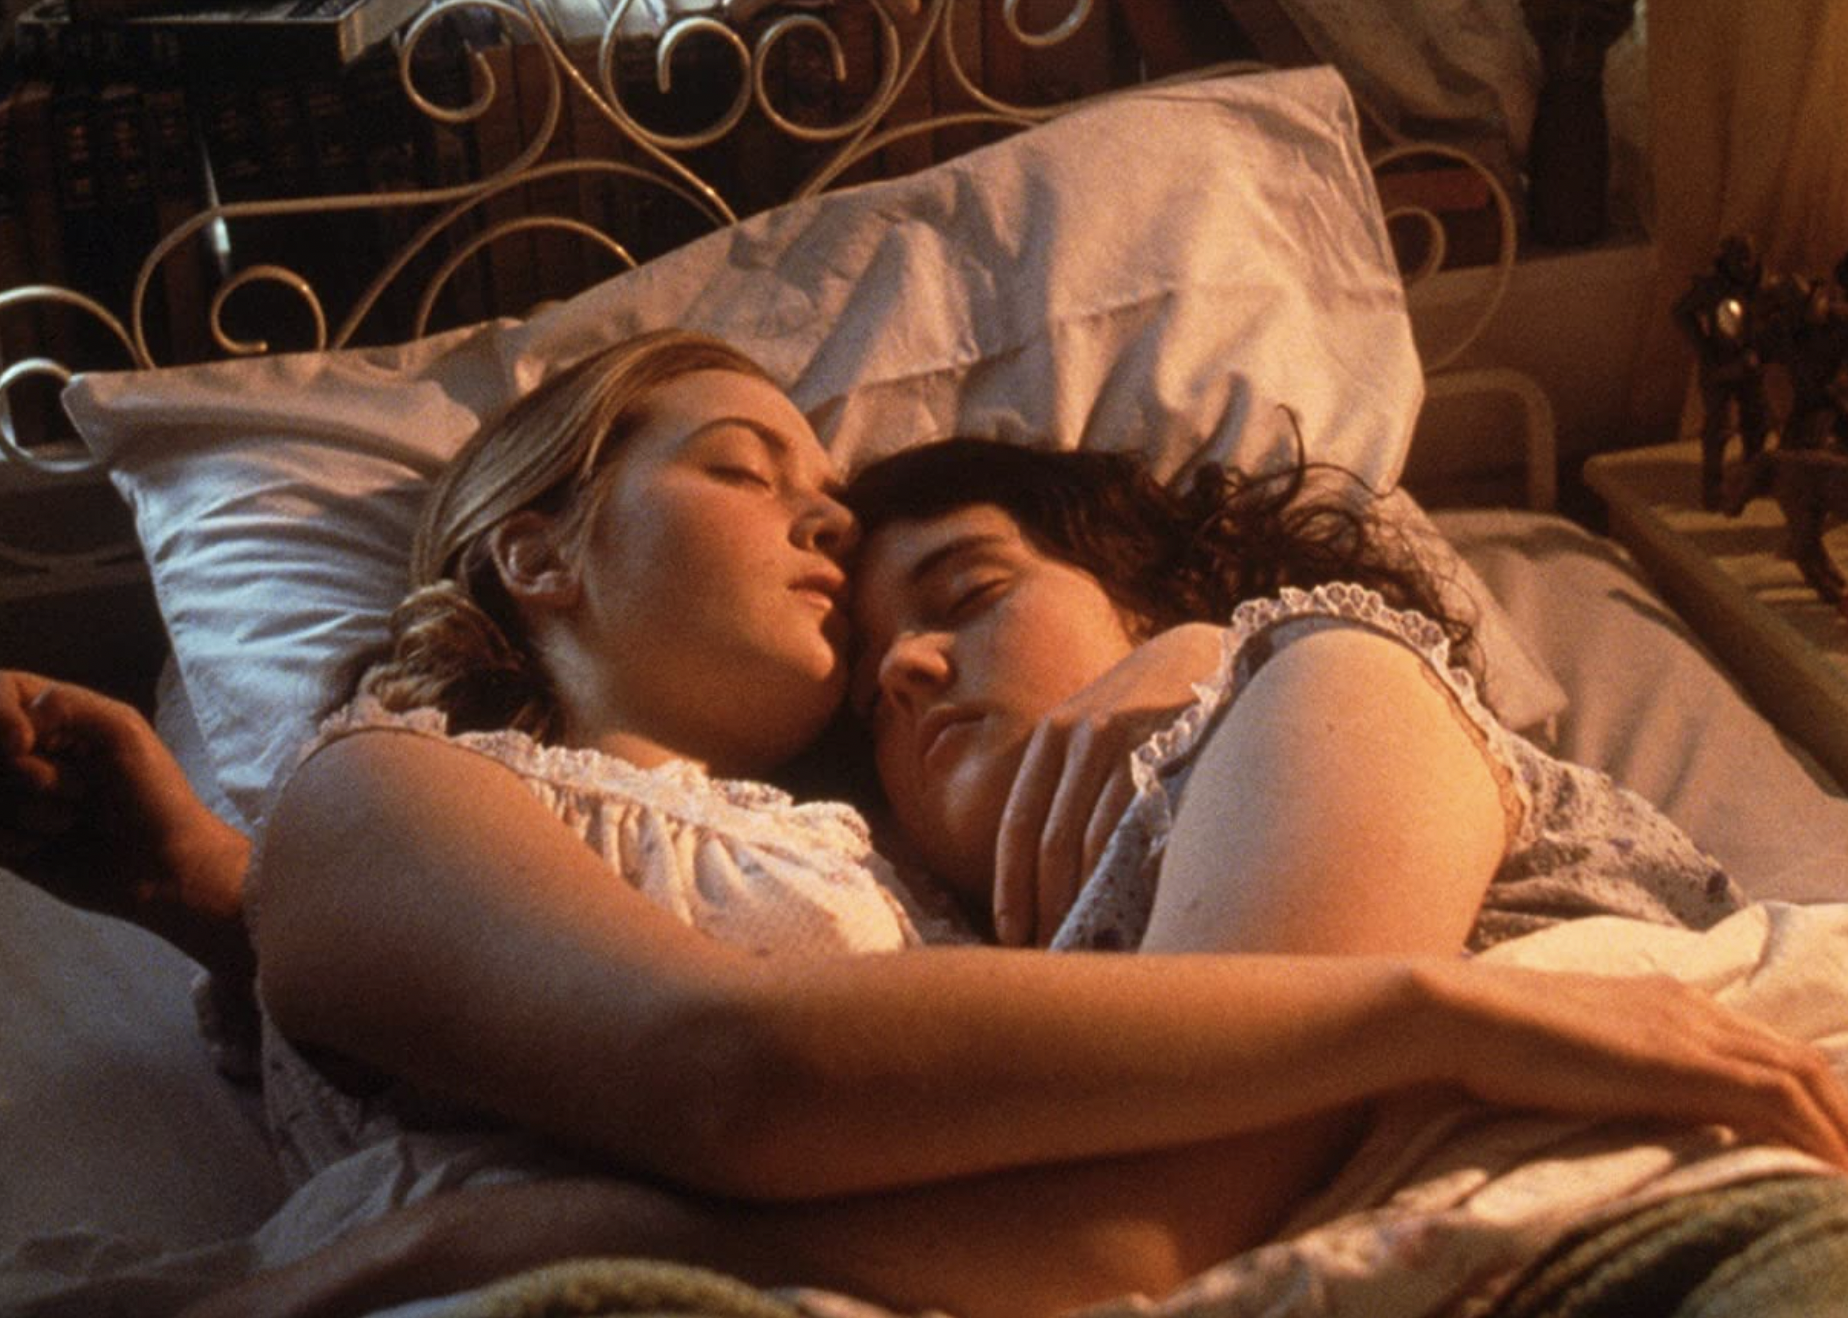 Kate Winslet and Melanie Lynskey in "Heavenly Creatures".